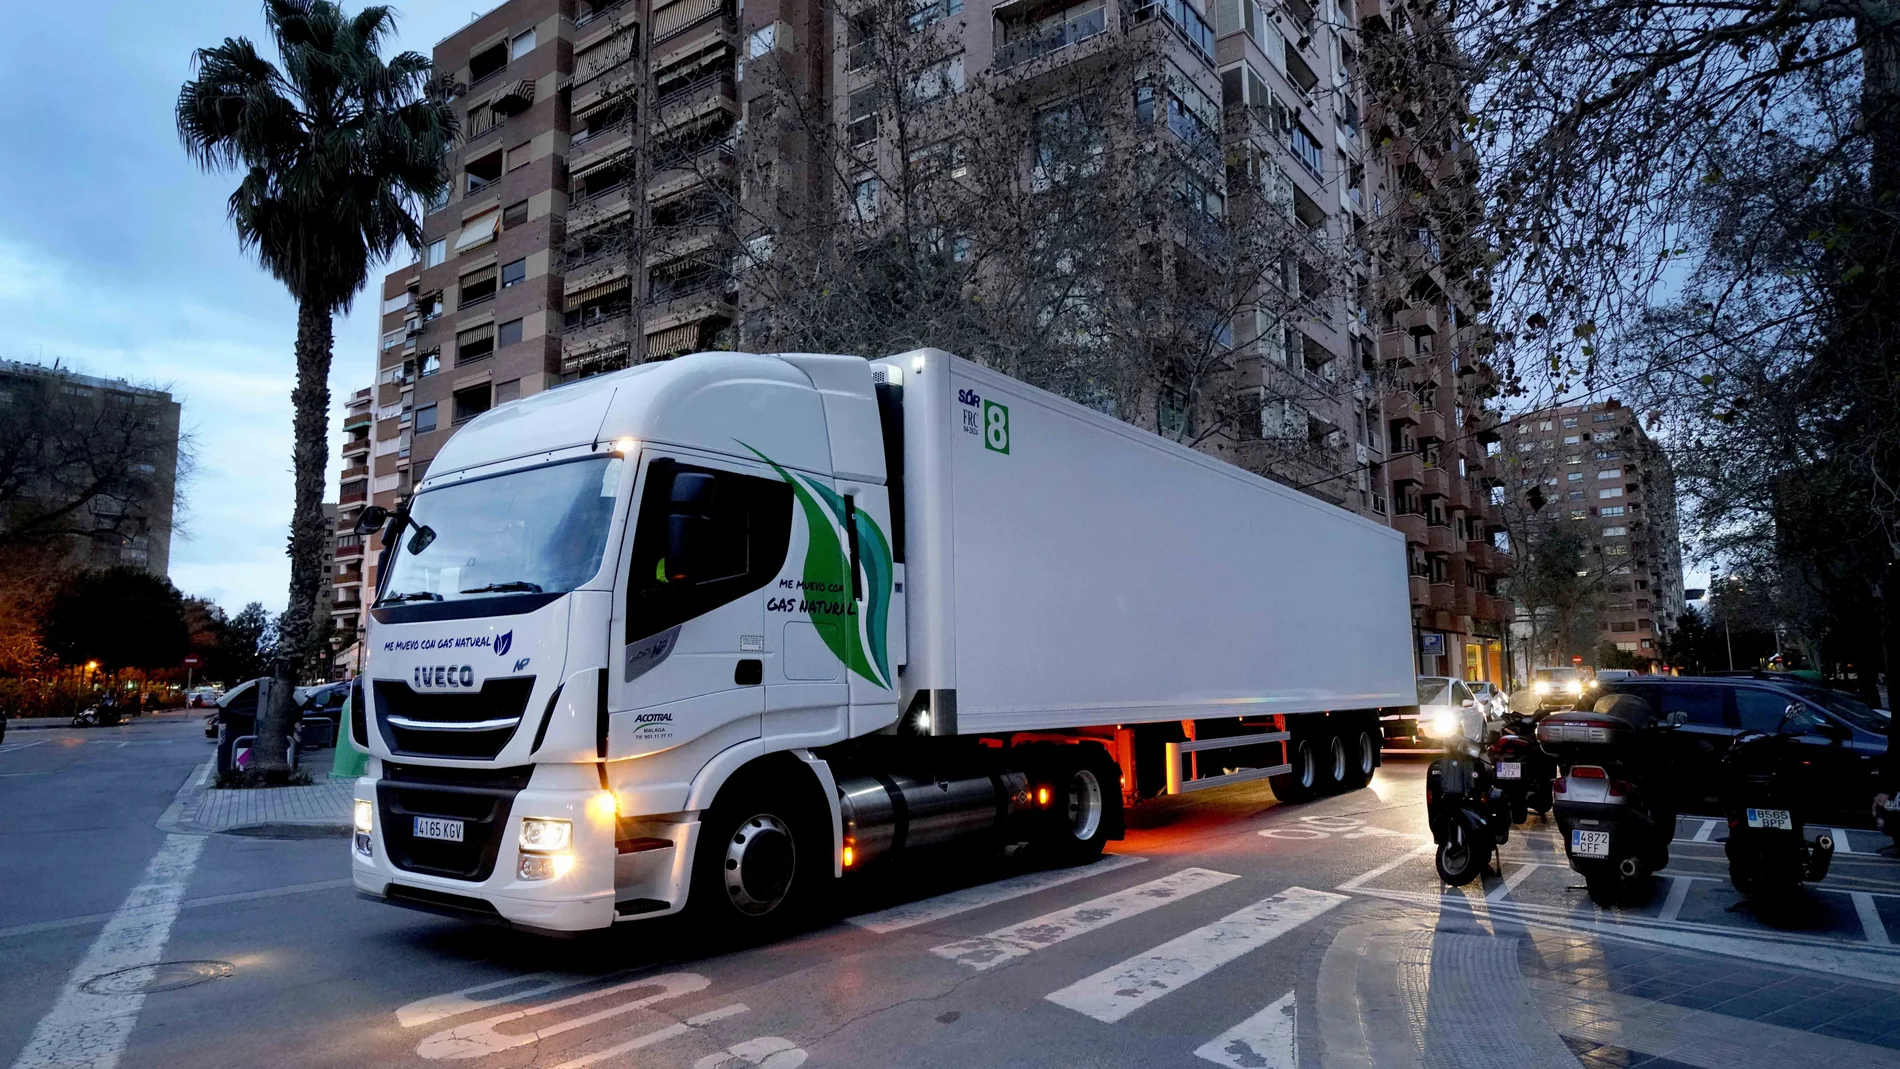 Camión propulsado a gas natural descargando en un supermercado en Valencia